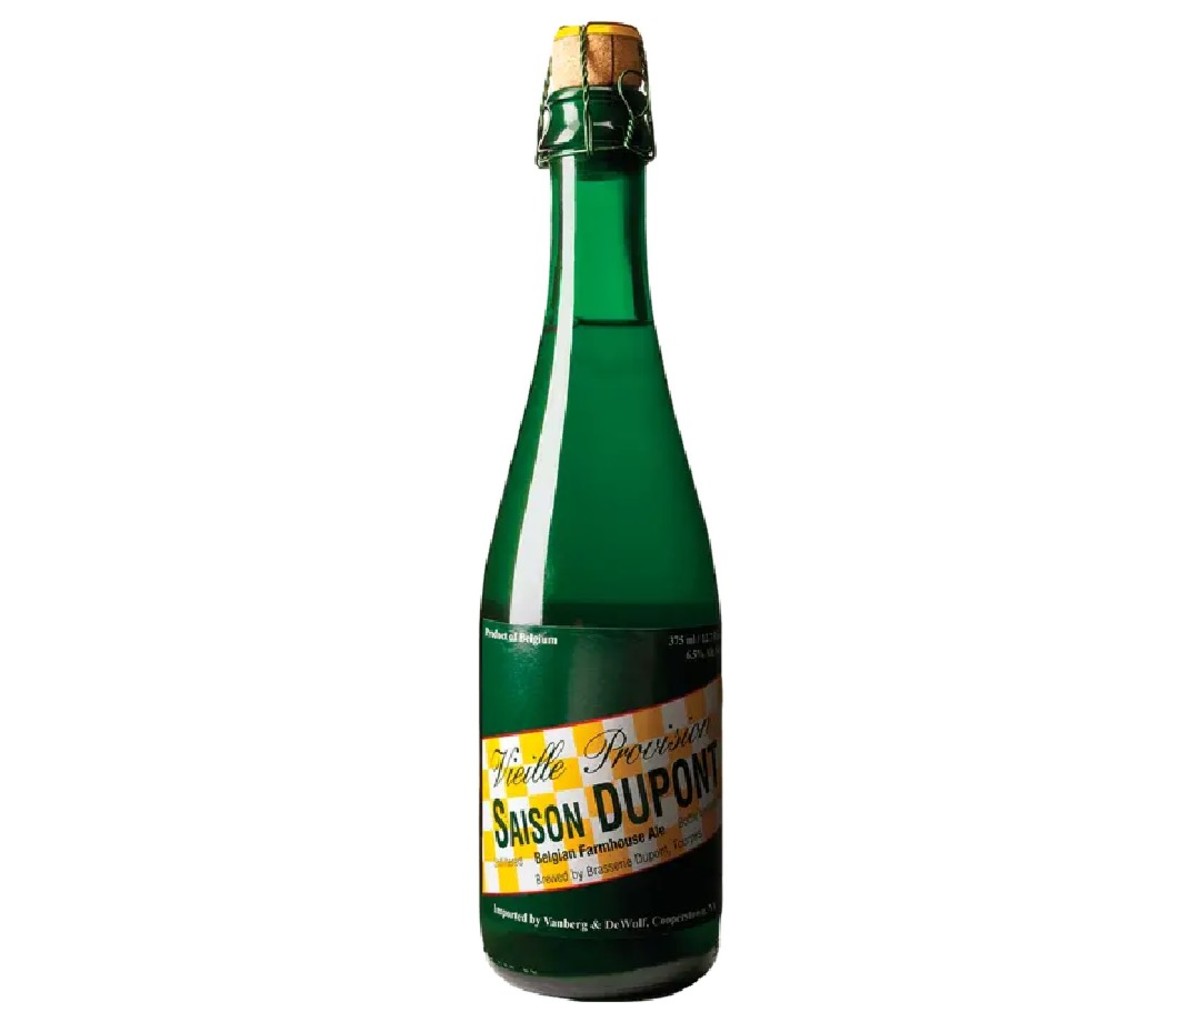 Bottle of Saison DuPont beer